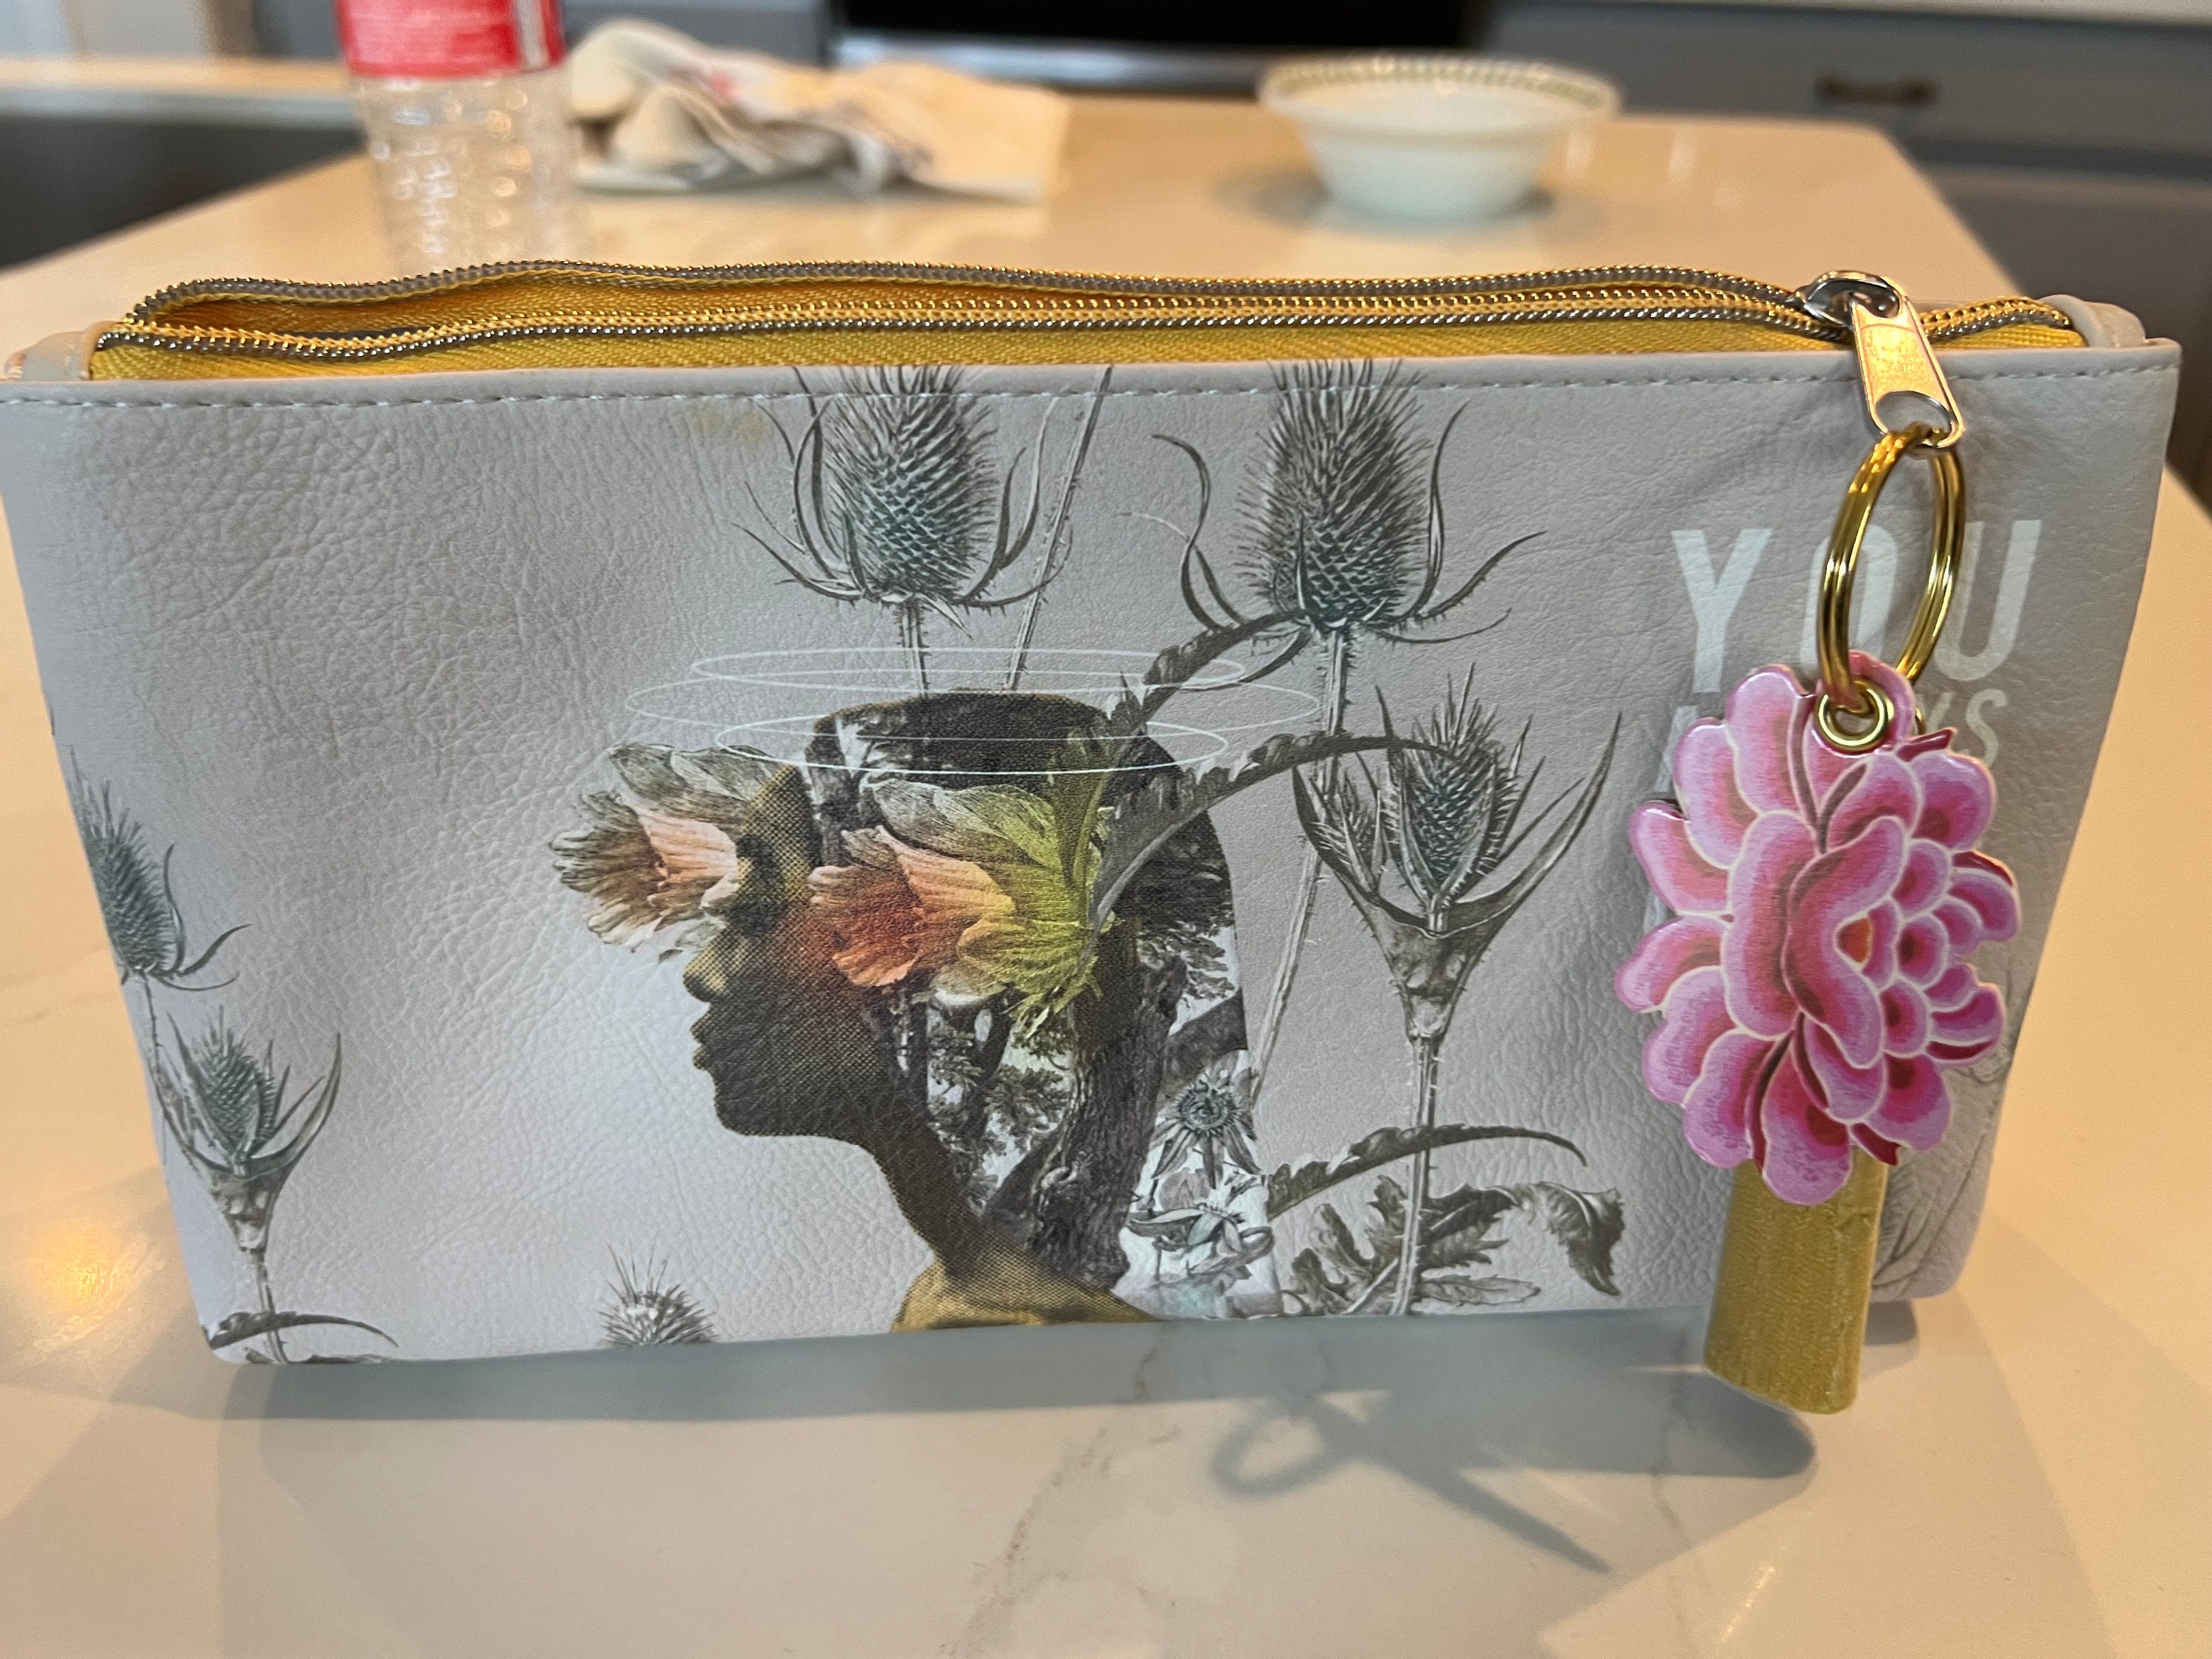 PAPAYA! Art Beauty Bouquet Accessory Pouch Clutch Makeup Bag (10